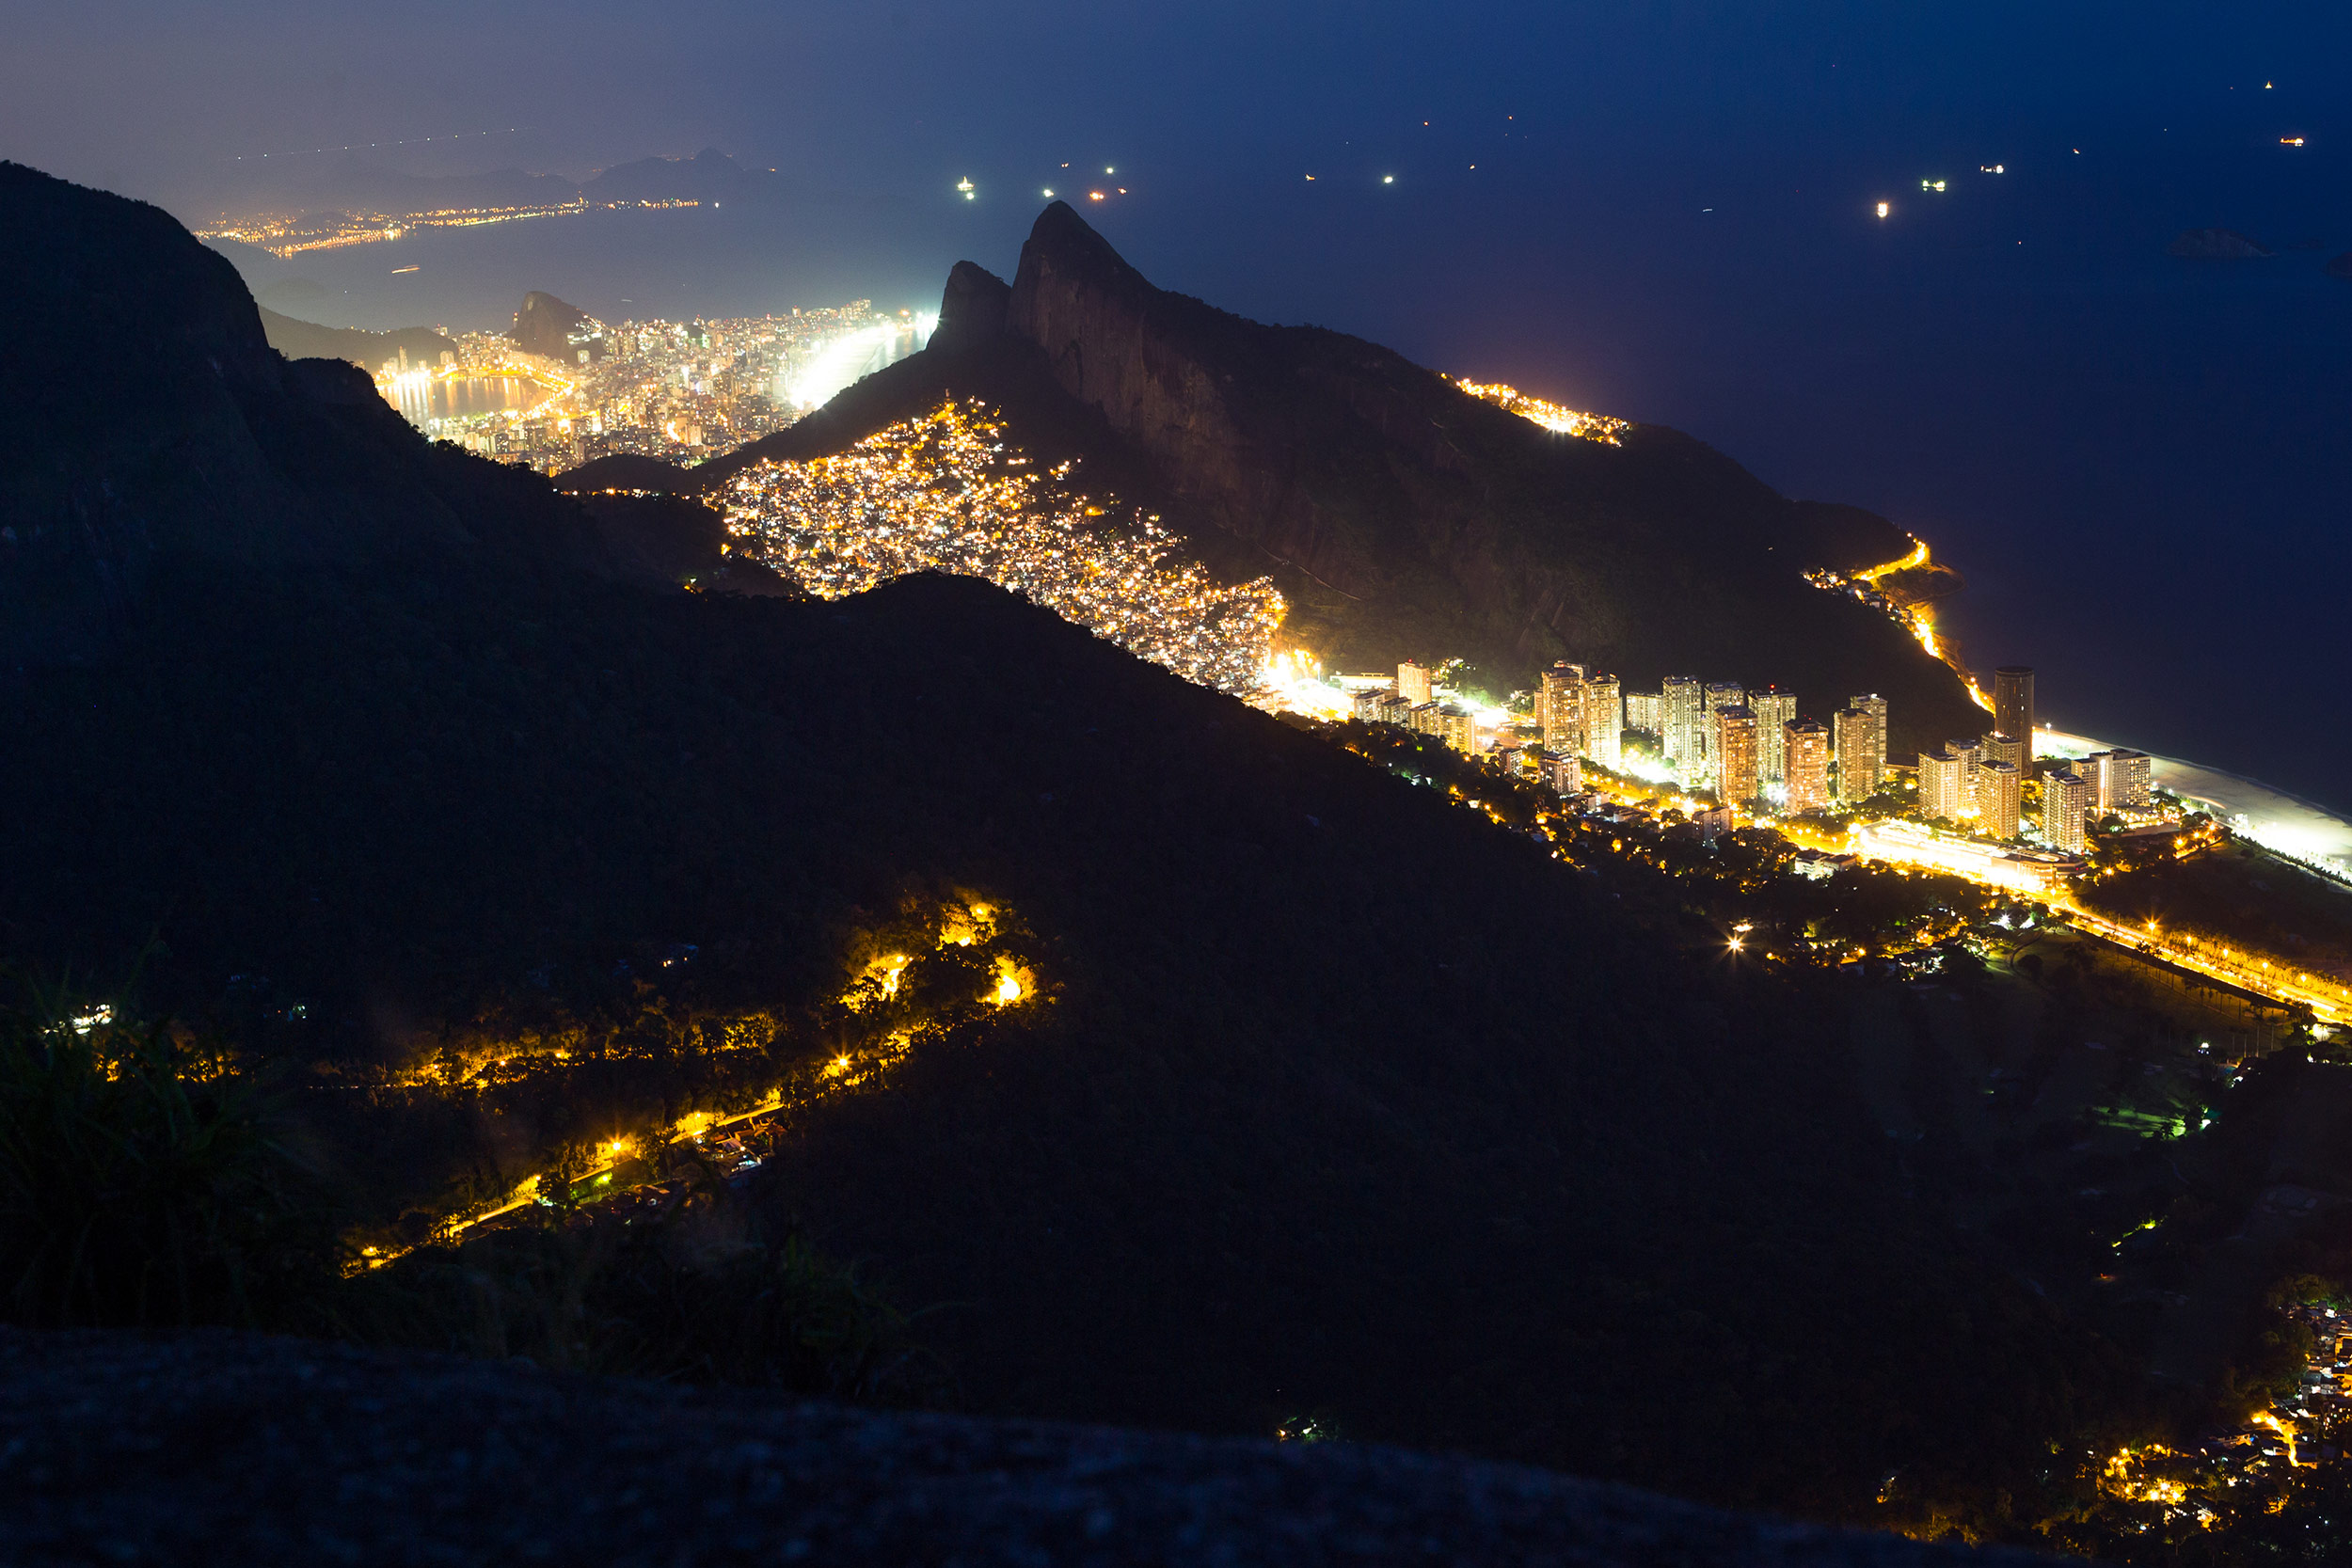   Rio de Janeiro, Brazil  